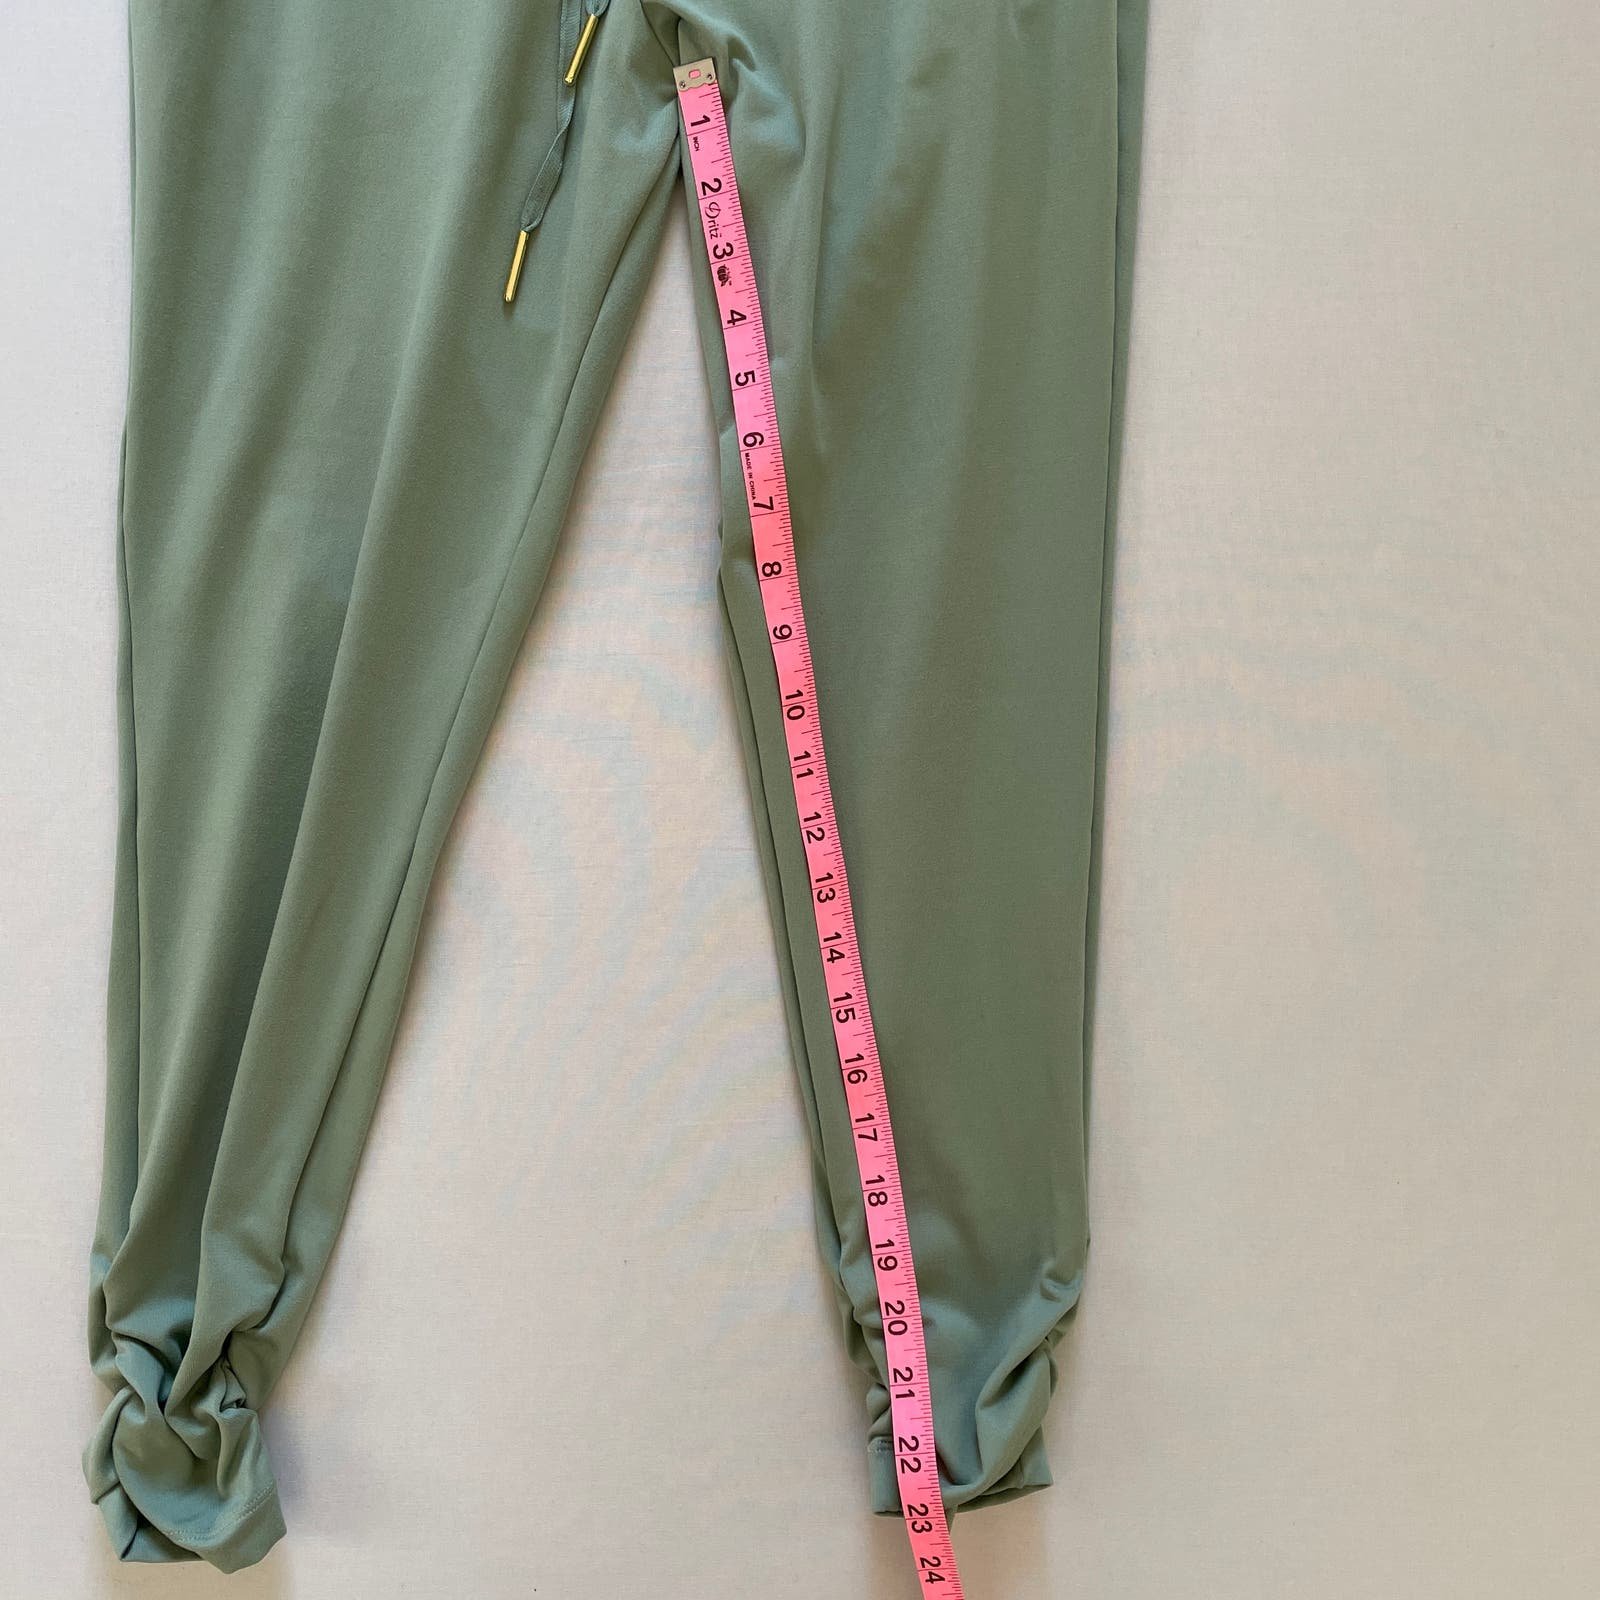 Stylish Gymshark Pants Womens Small Green Whitney Simmons Ruched Joggers Activewear HkfGKU6Iq Online Shop